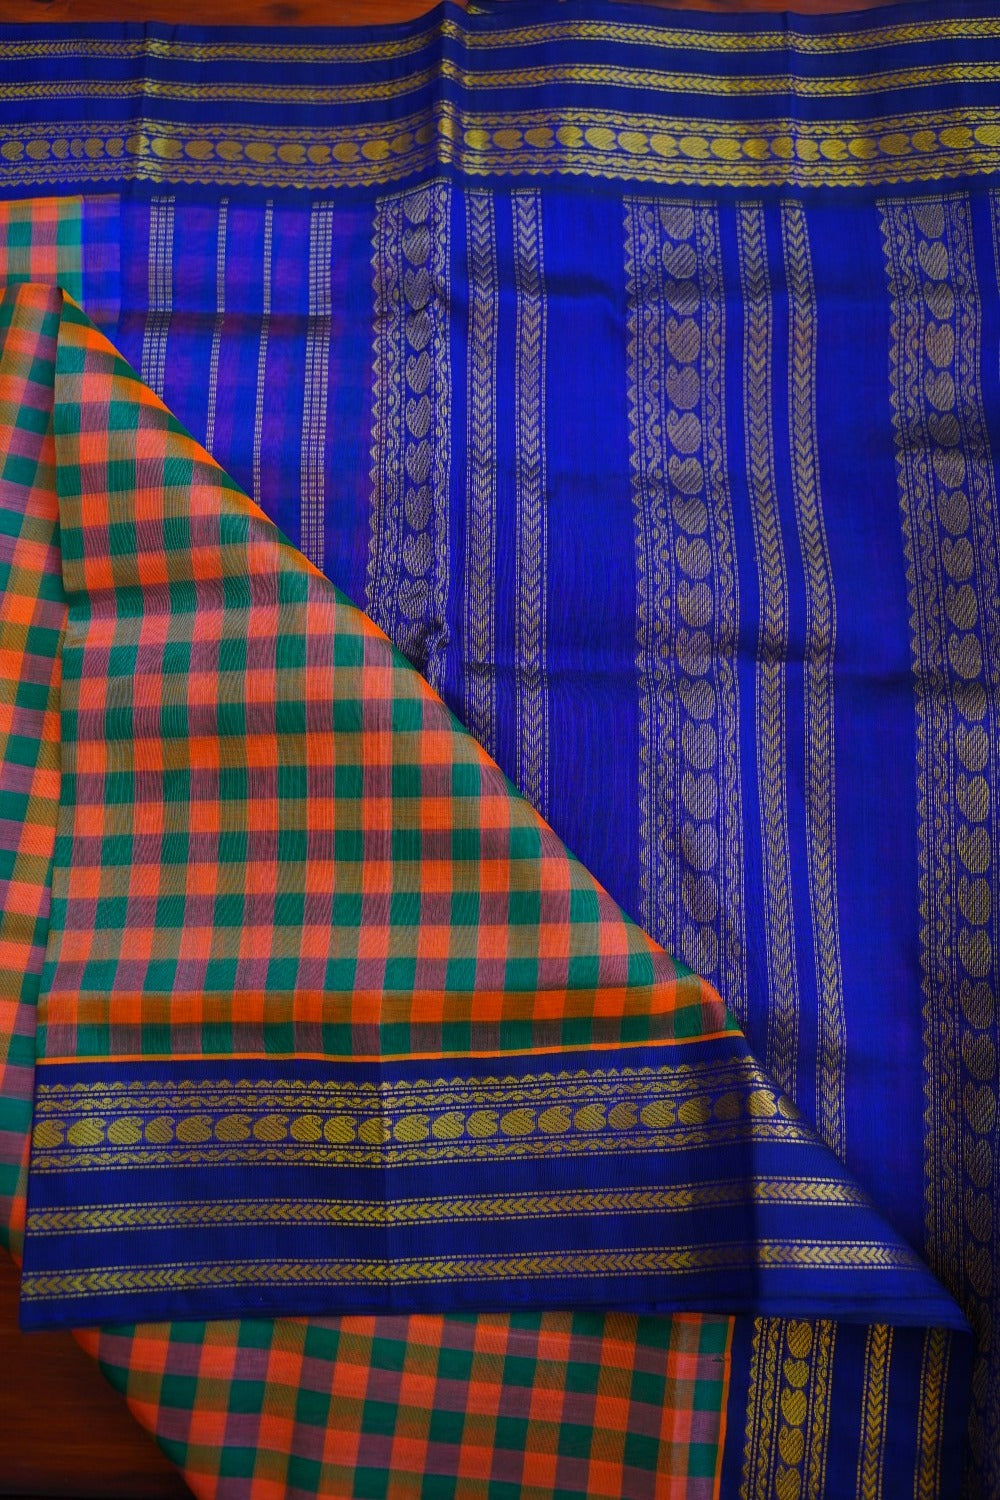 Kanchi Silk Cotton Checked Saree With Zari Border  PC10160